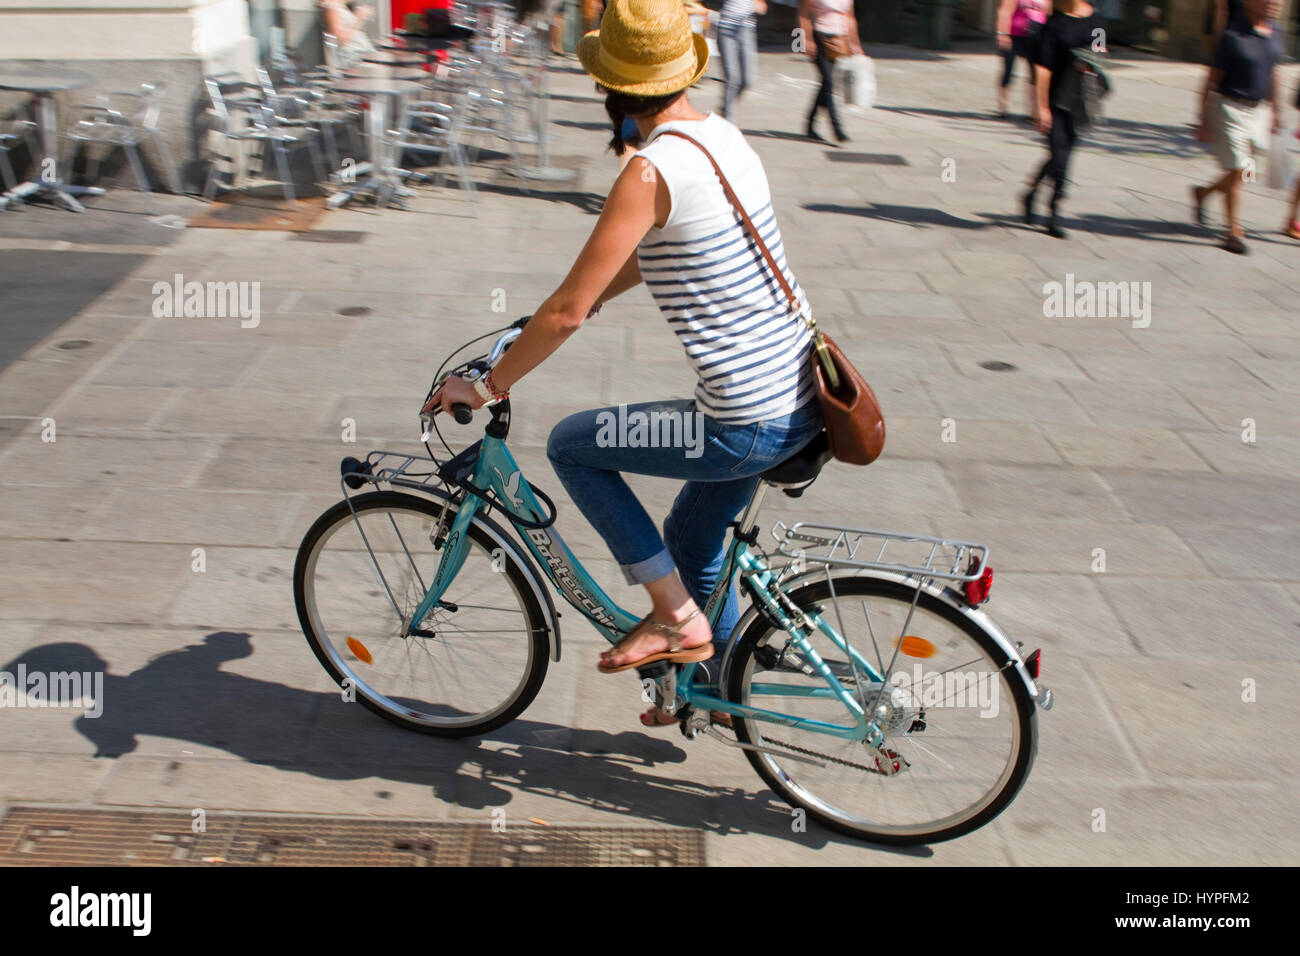 France, North-Western France, Nantes, woman on a bike Stock Photo